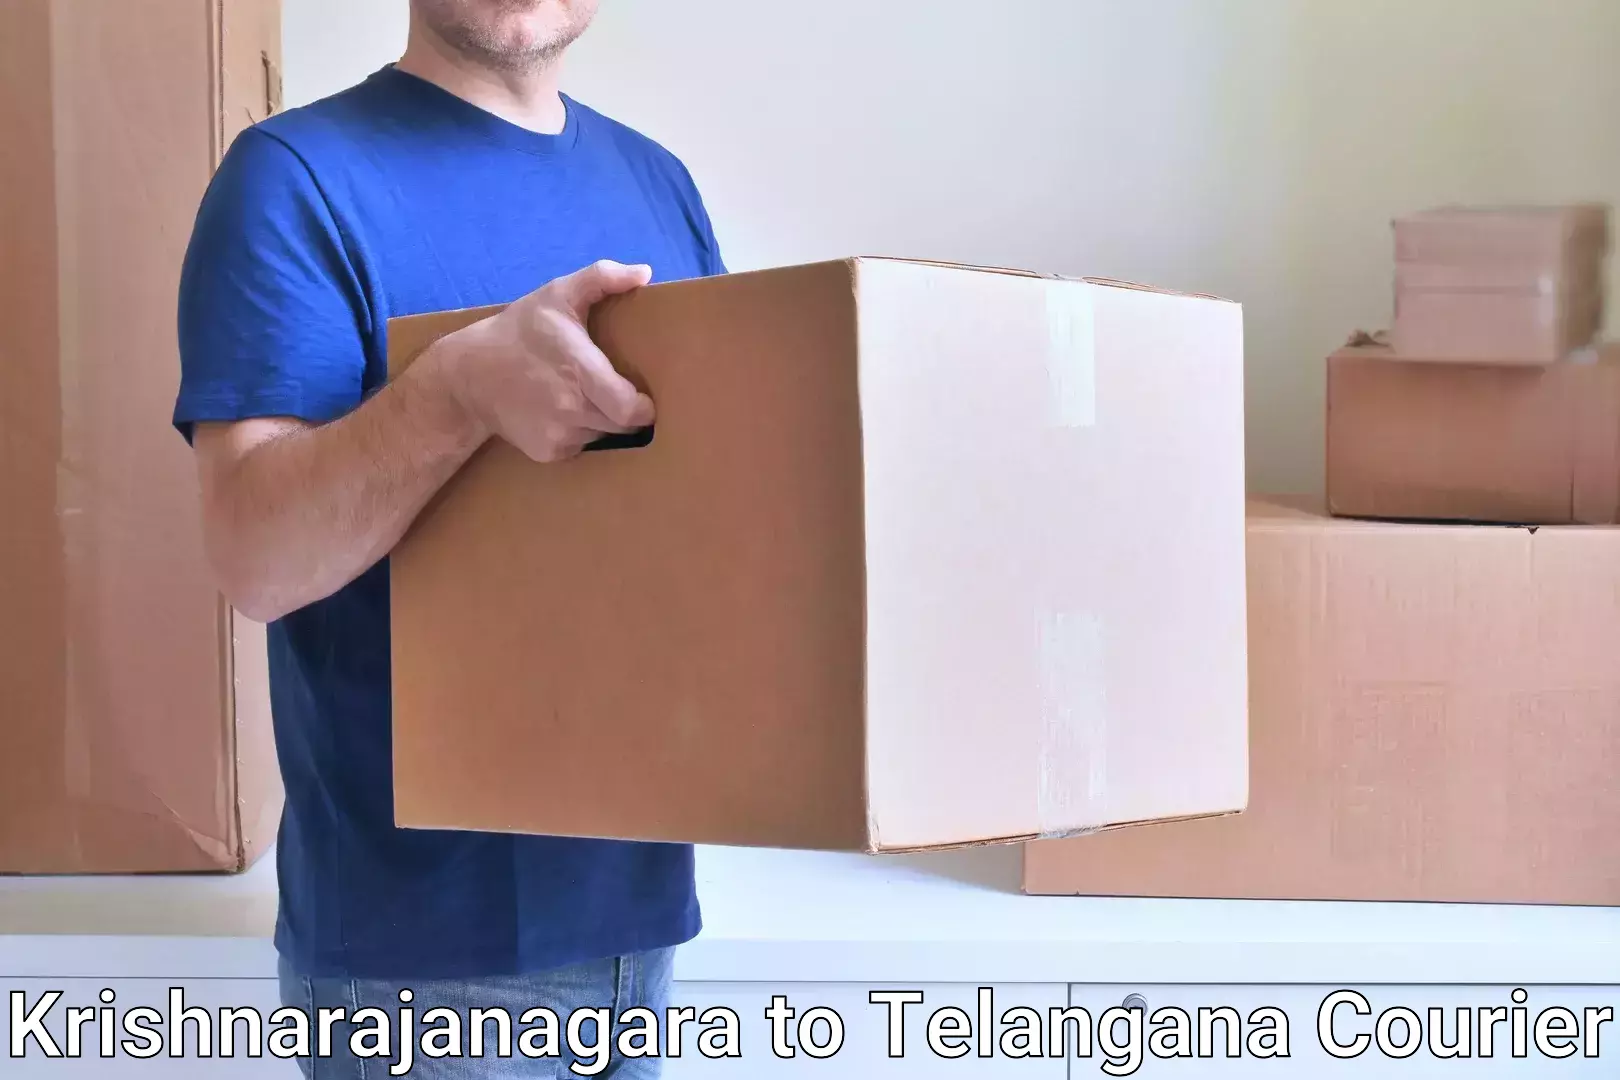 Same-day delivery solutions Krishnarajanagara to Warangal